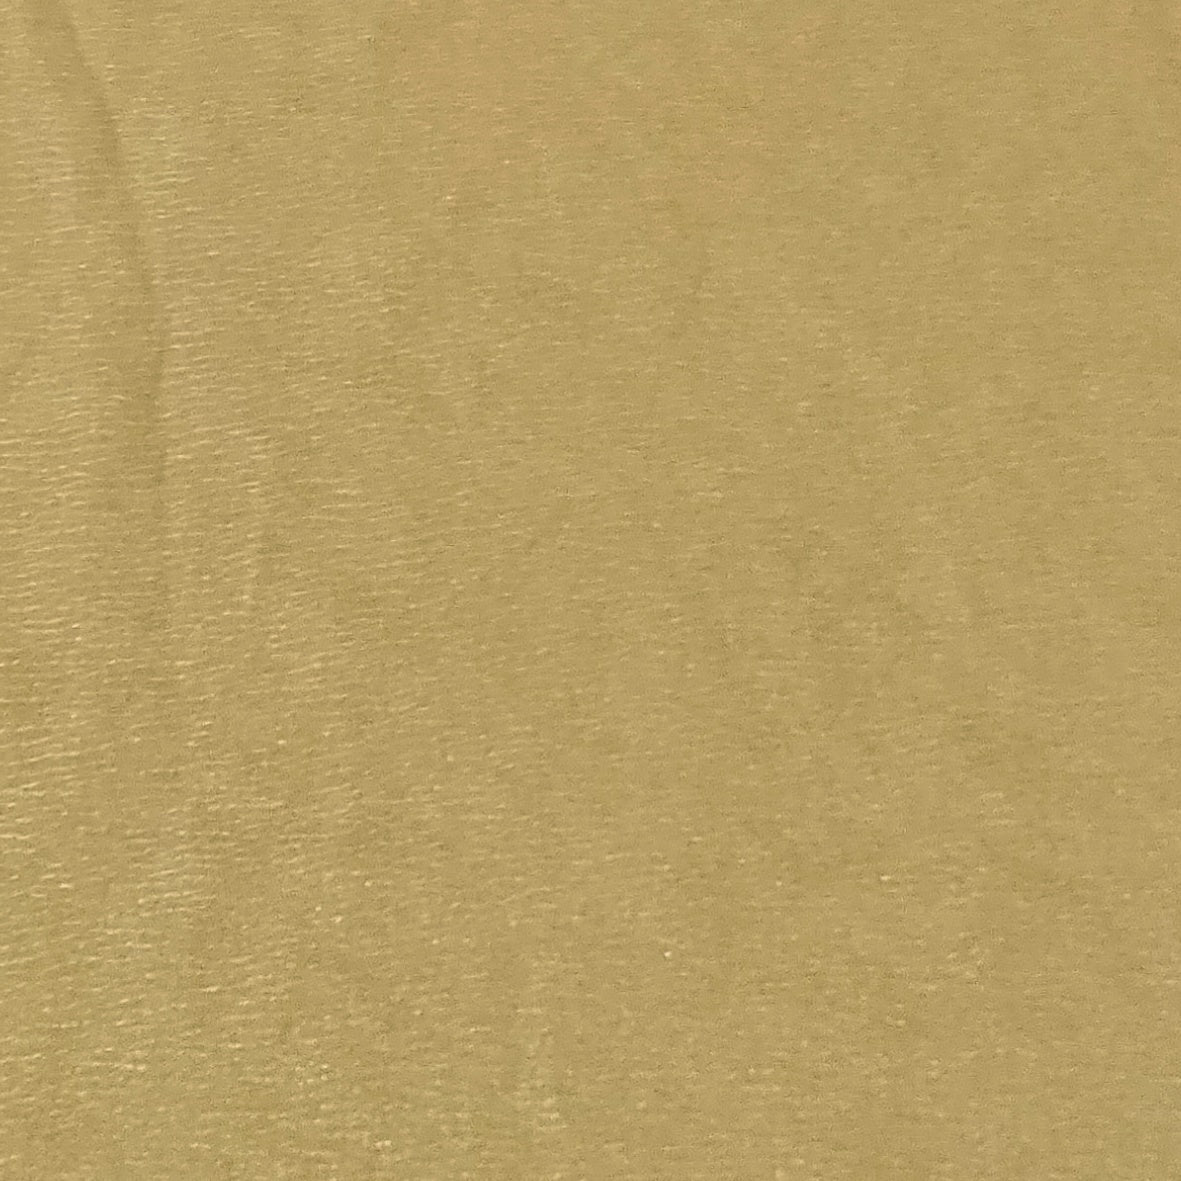 Golden Solid Gold Crush Georgette Satin Fabric - TradeUNO